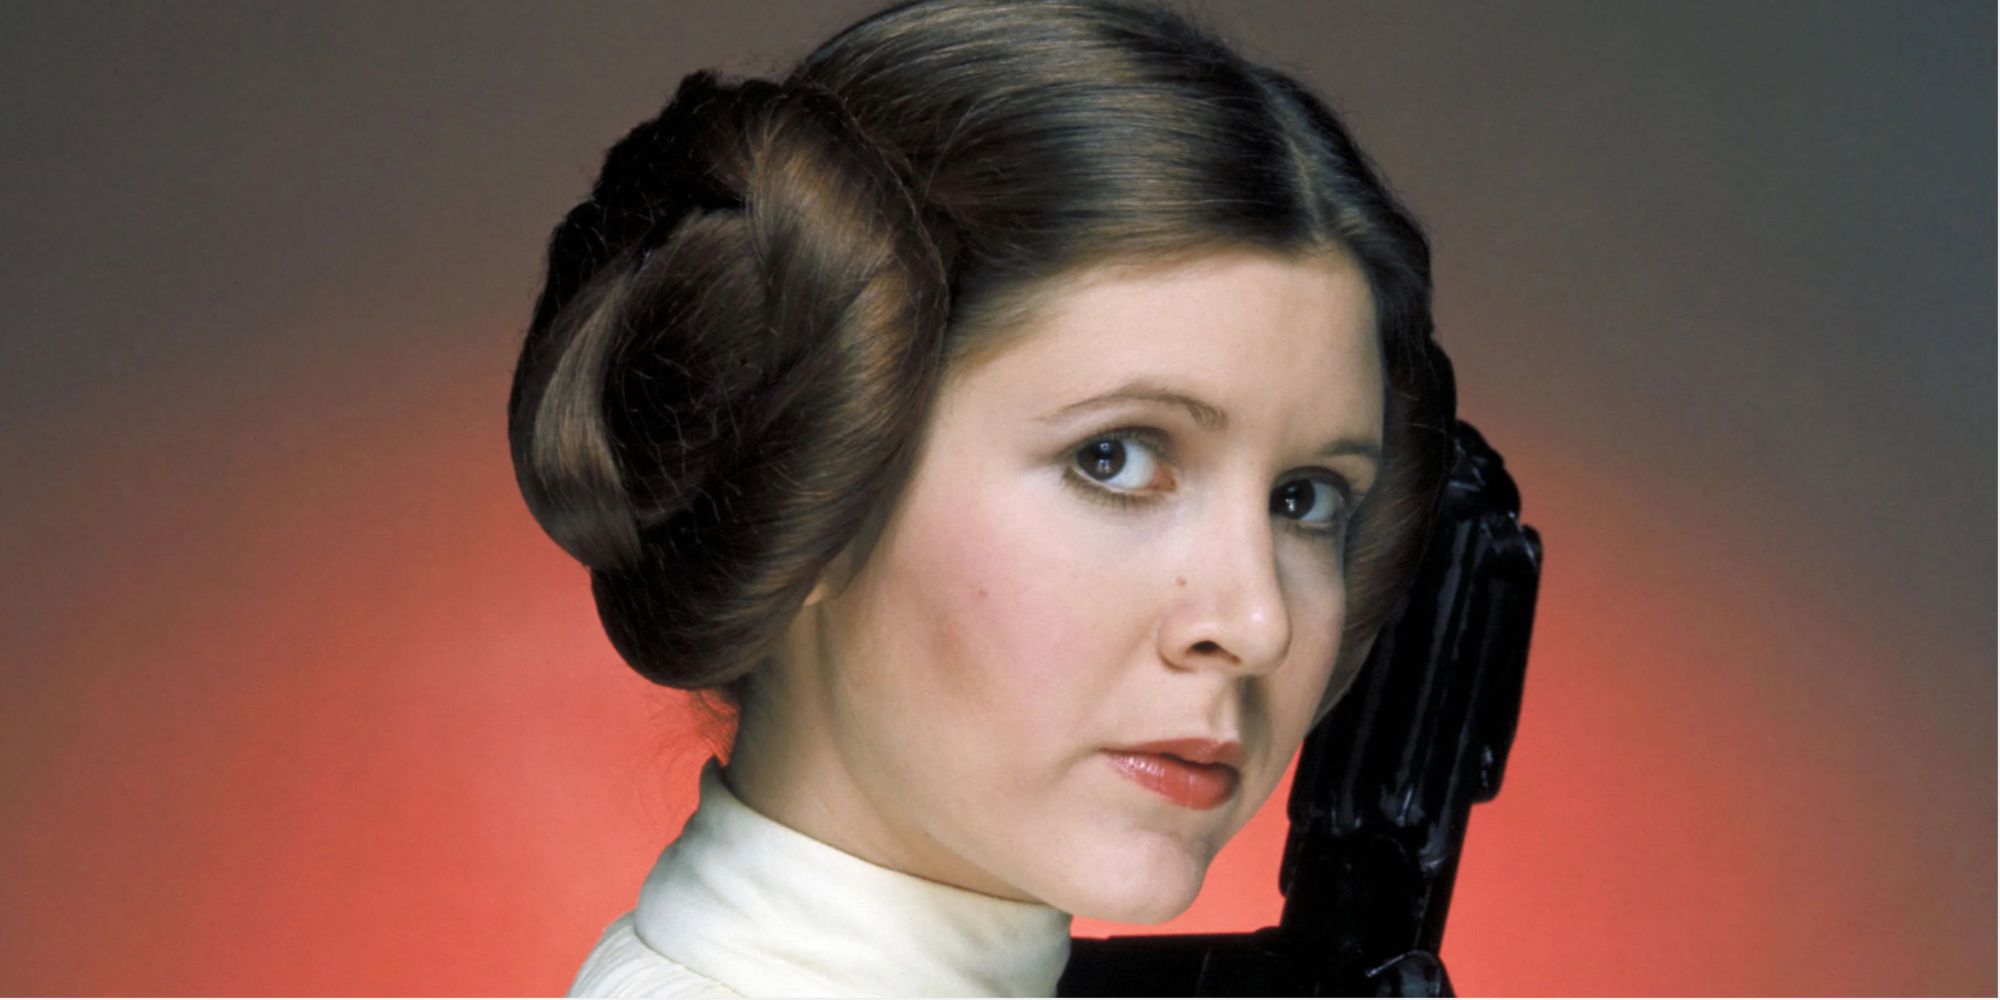 Princess Leia Organa in Star Wars